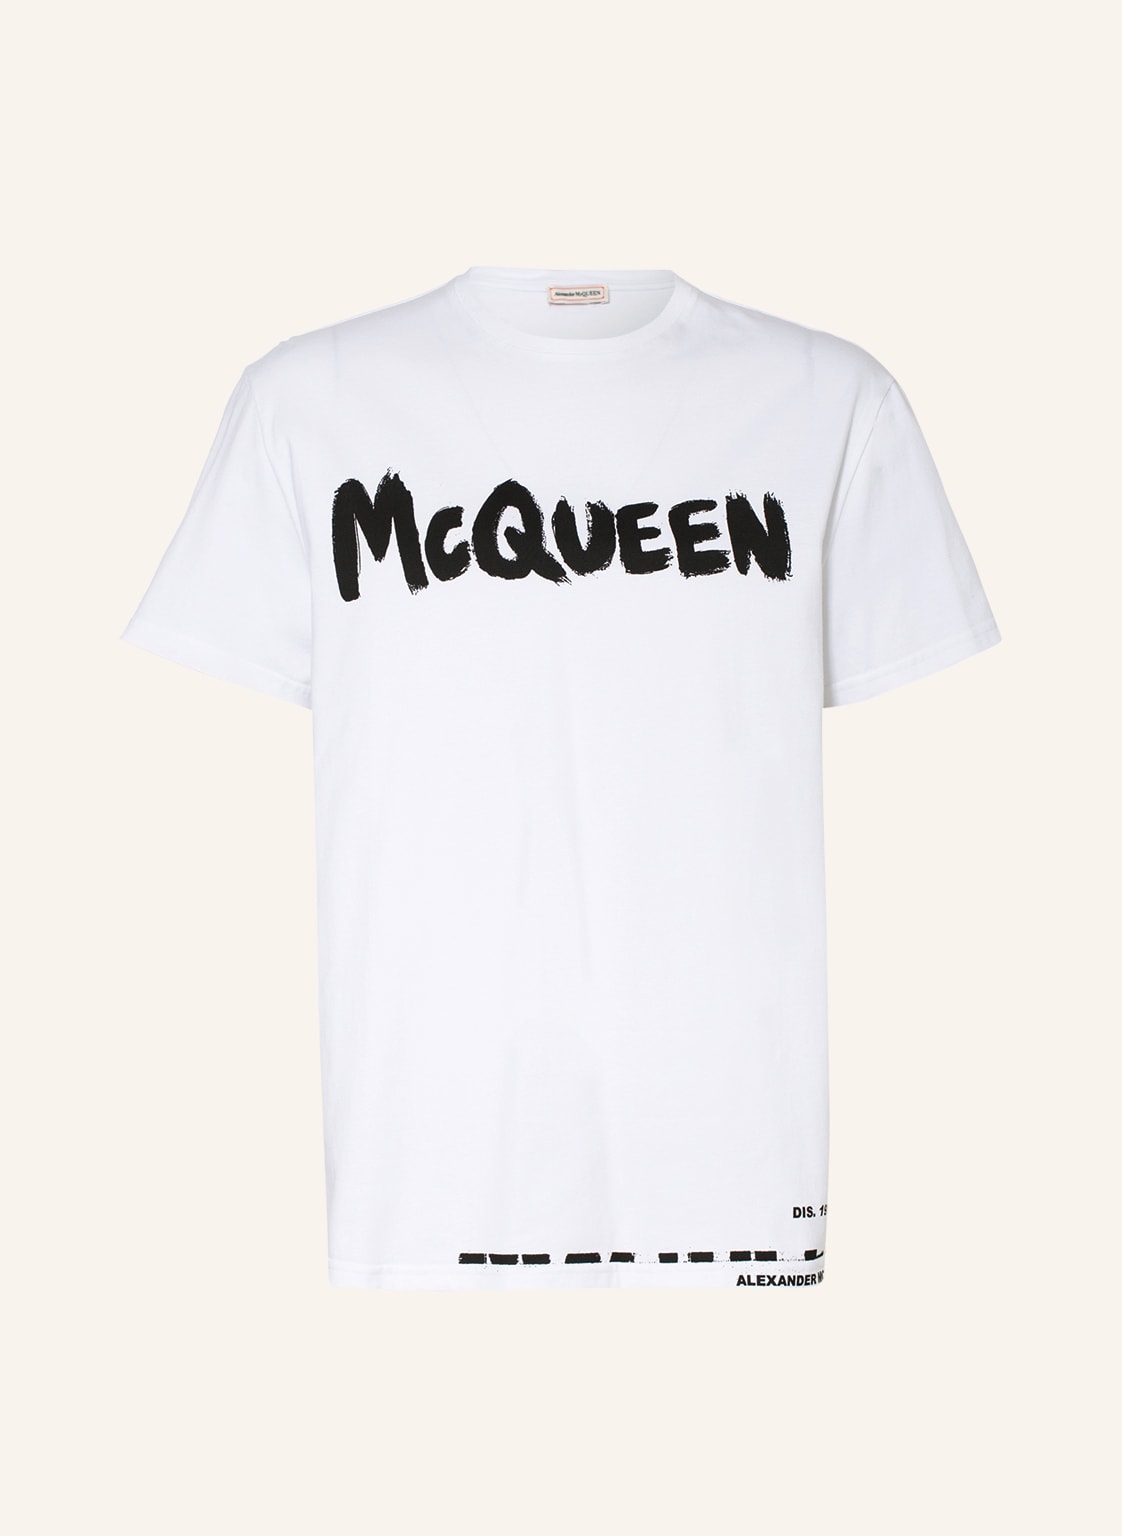 Alexander Mcqueen T-Shirt weiss von alexander mcqueen